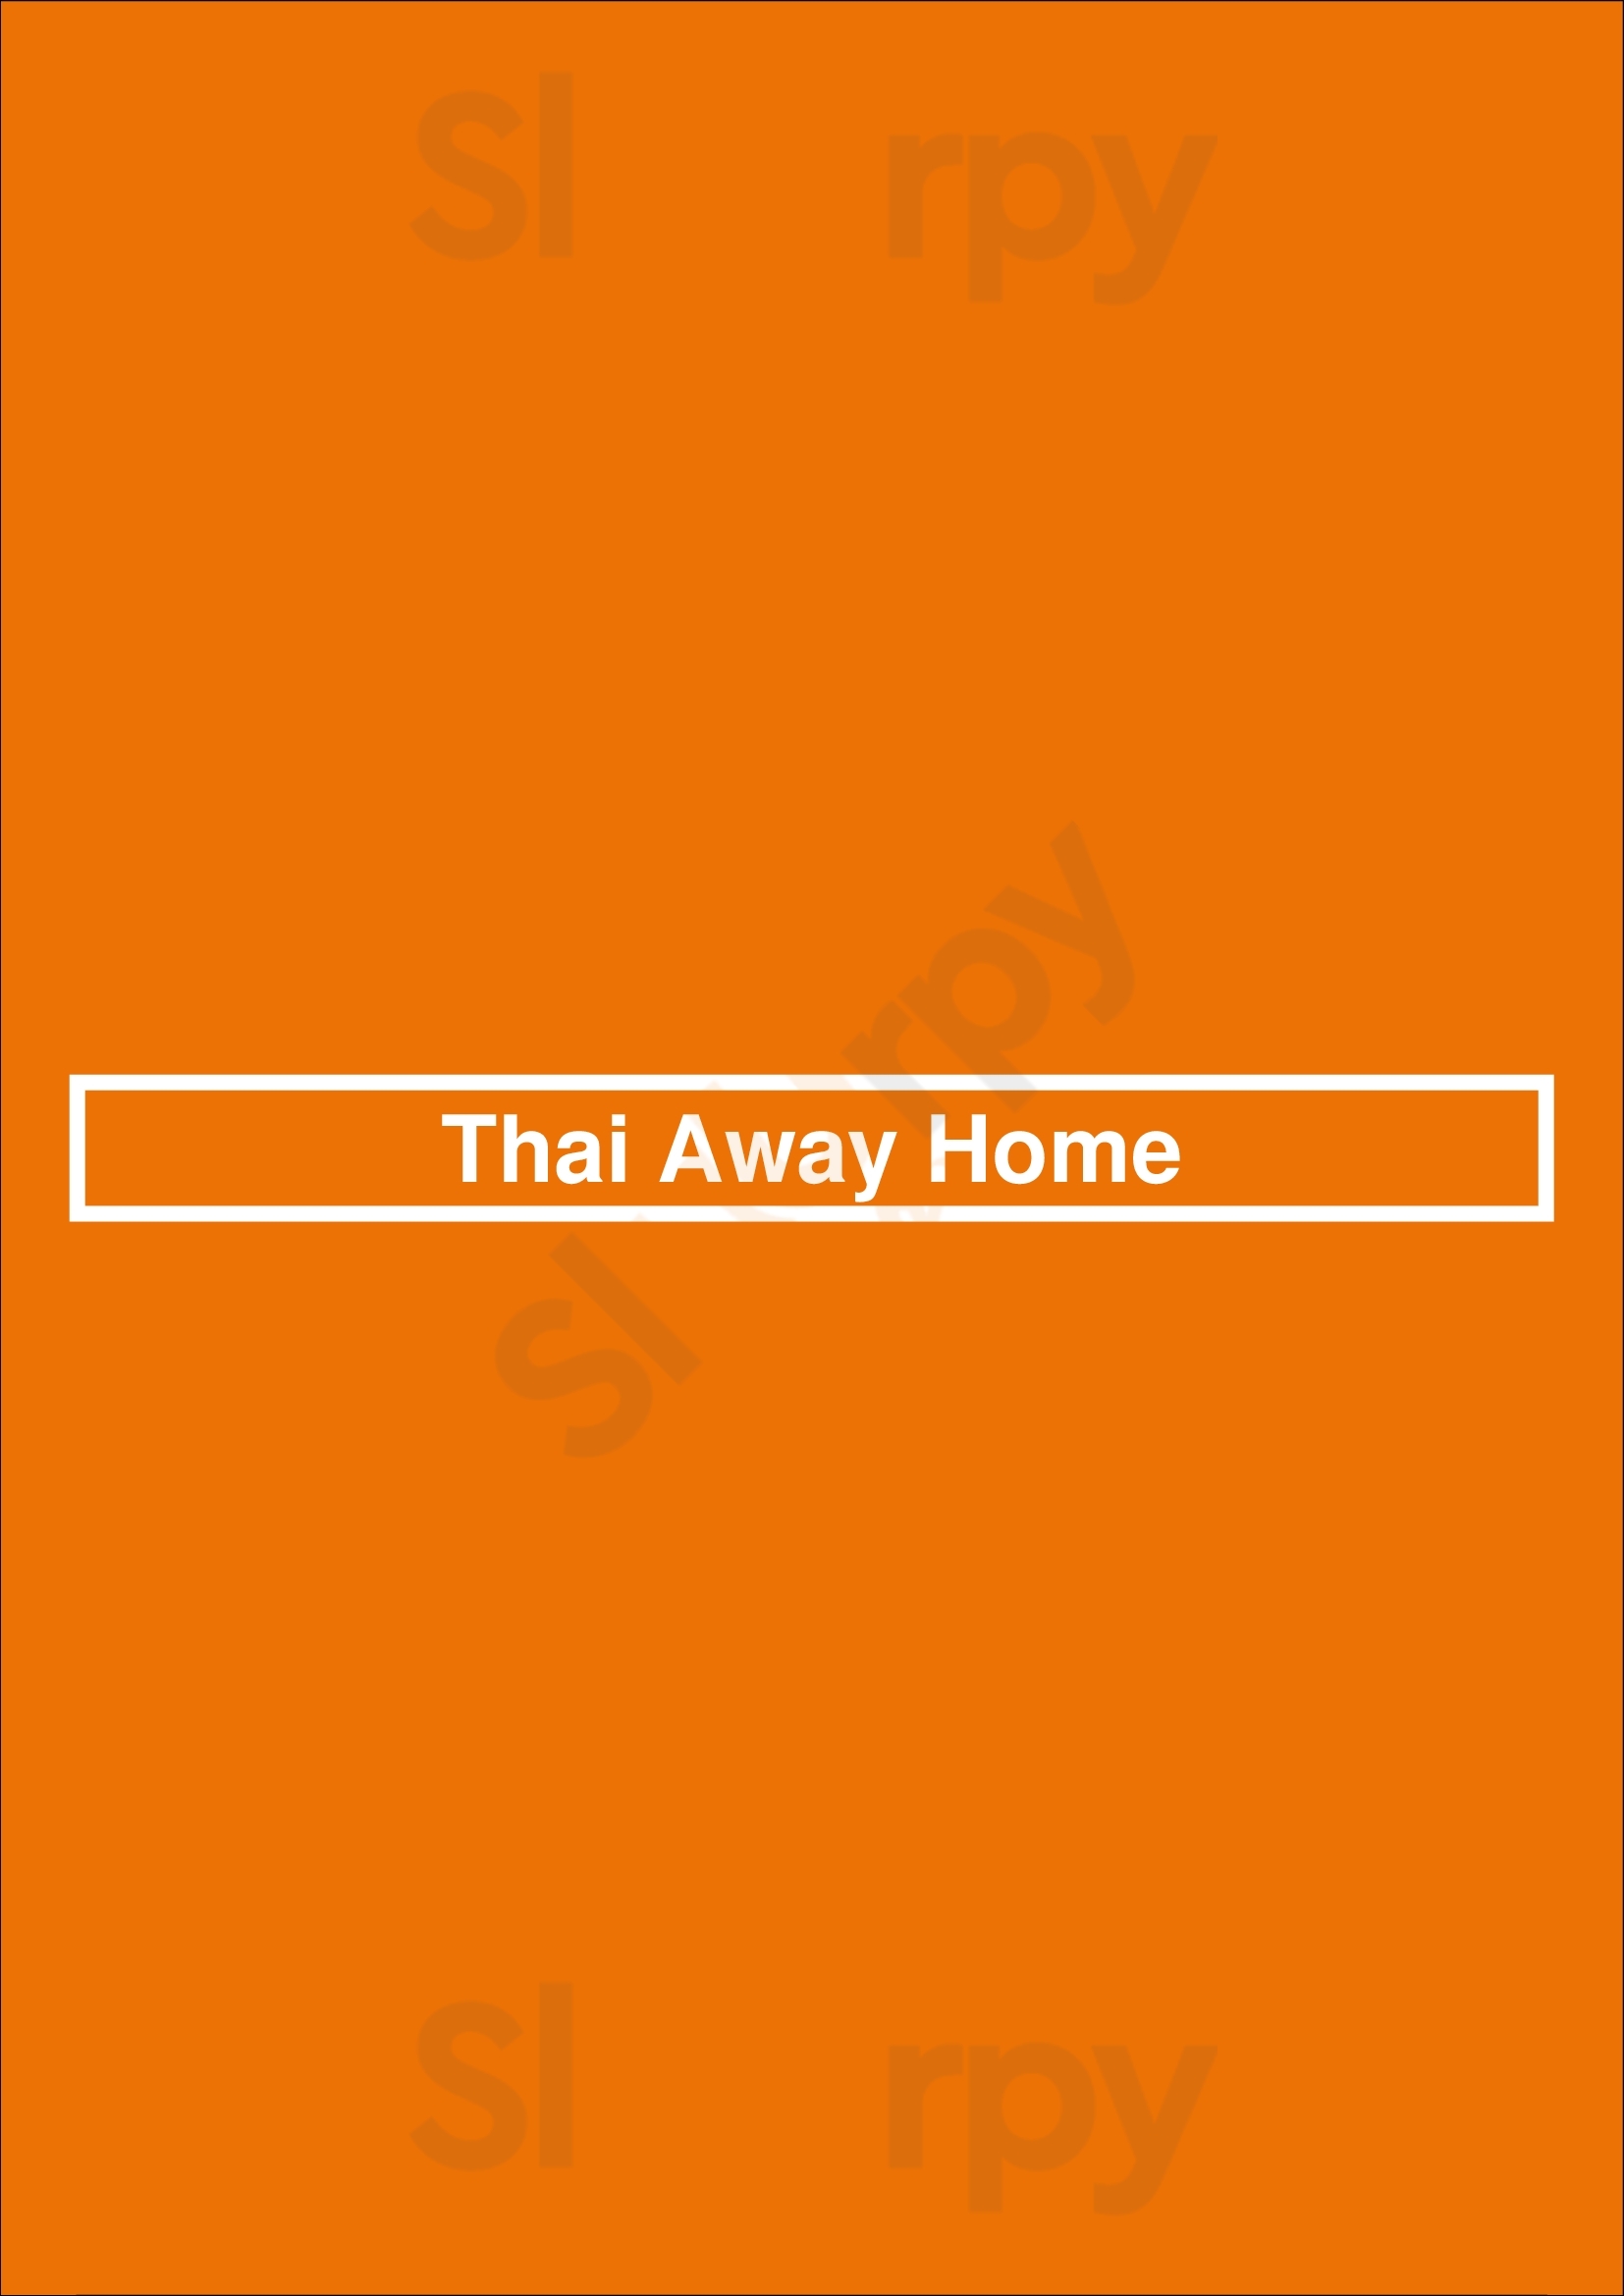 Thai Away Home Vancouver Menu - 1